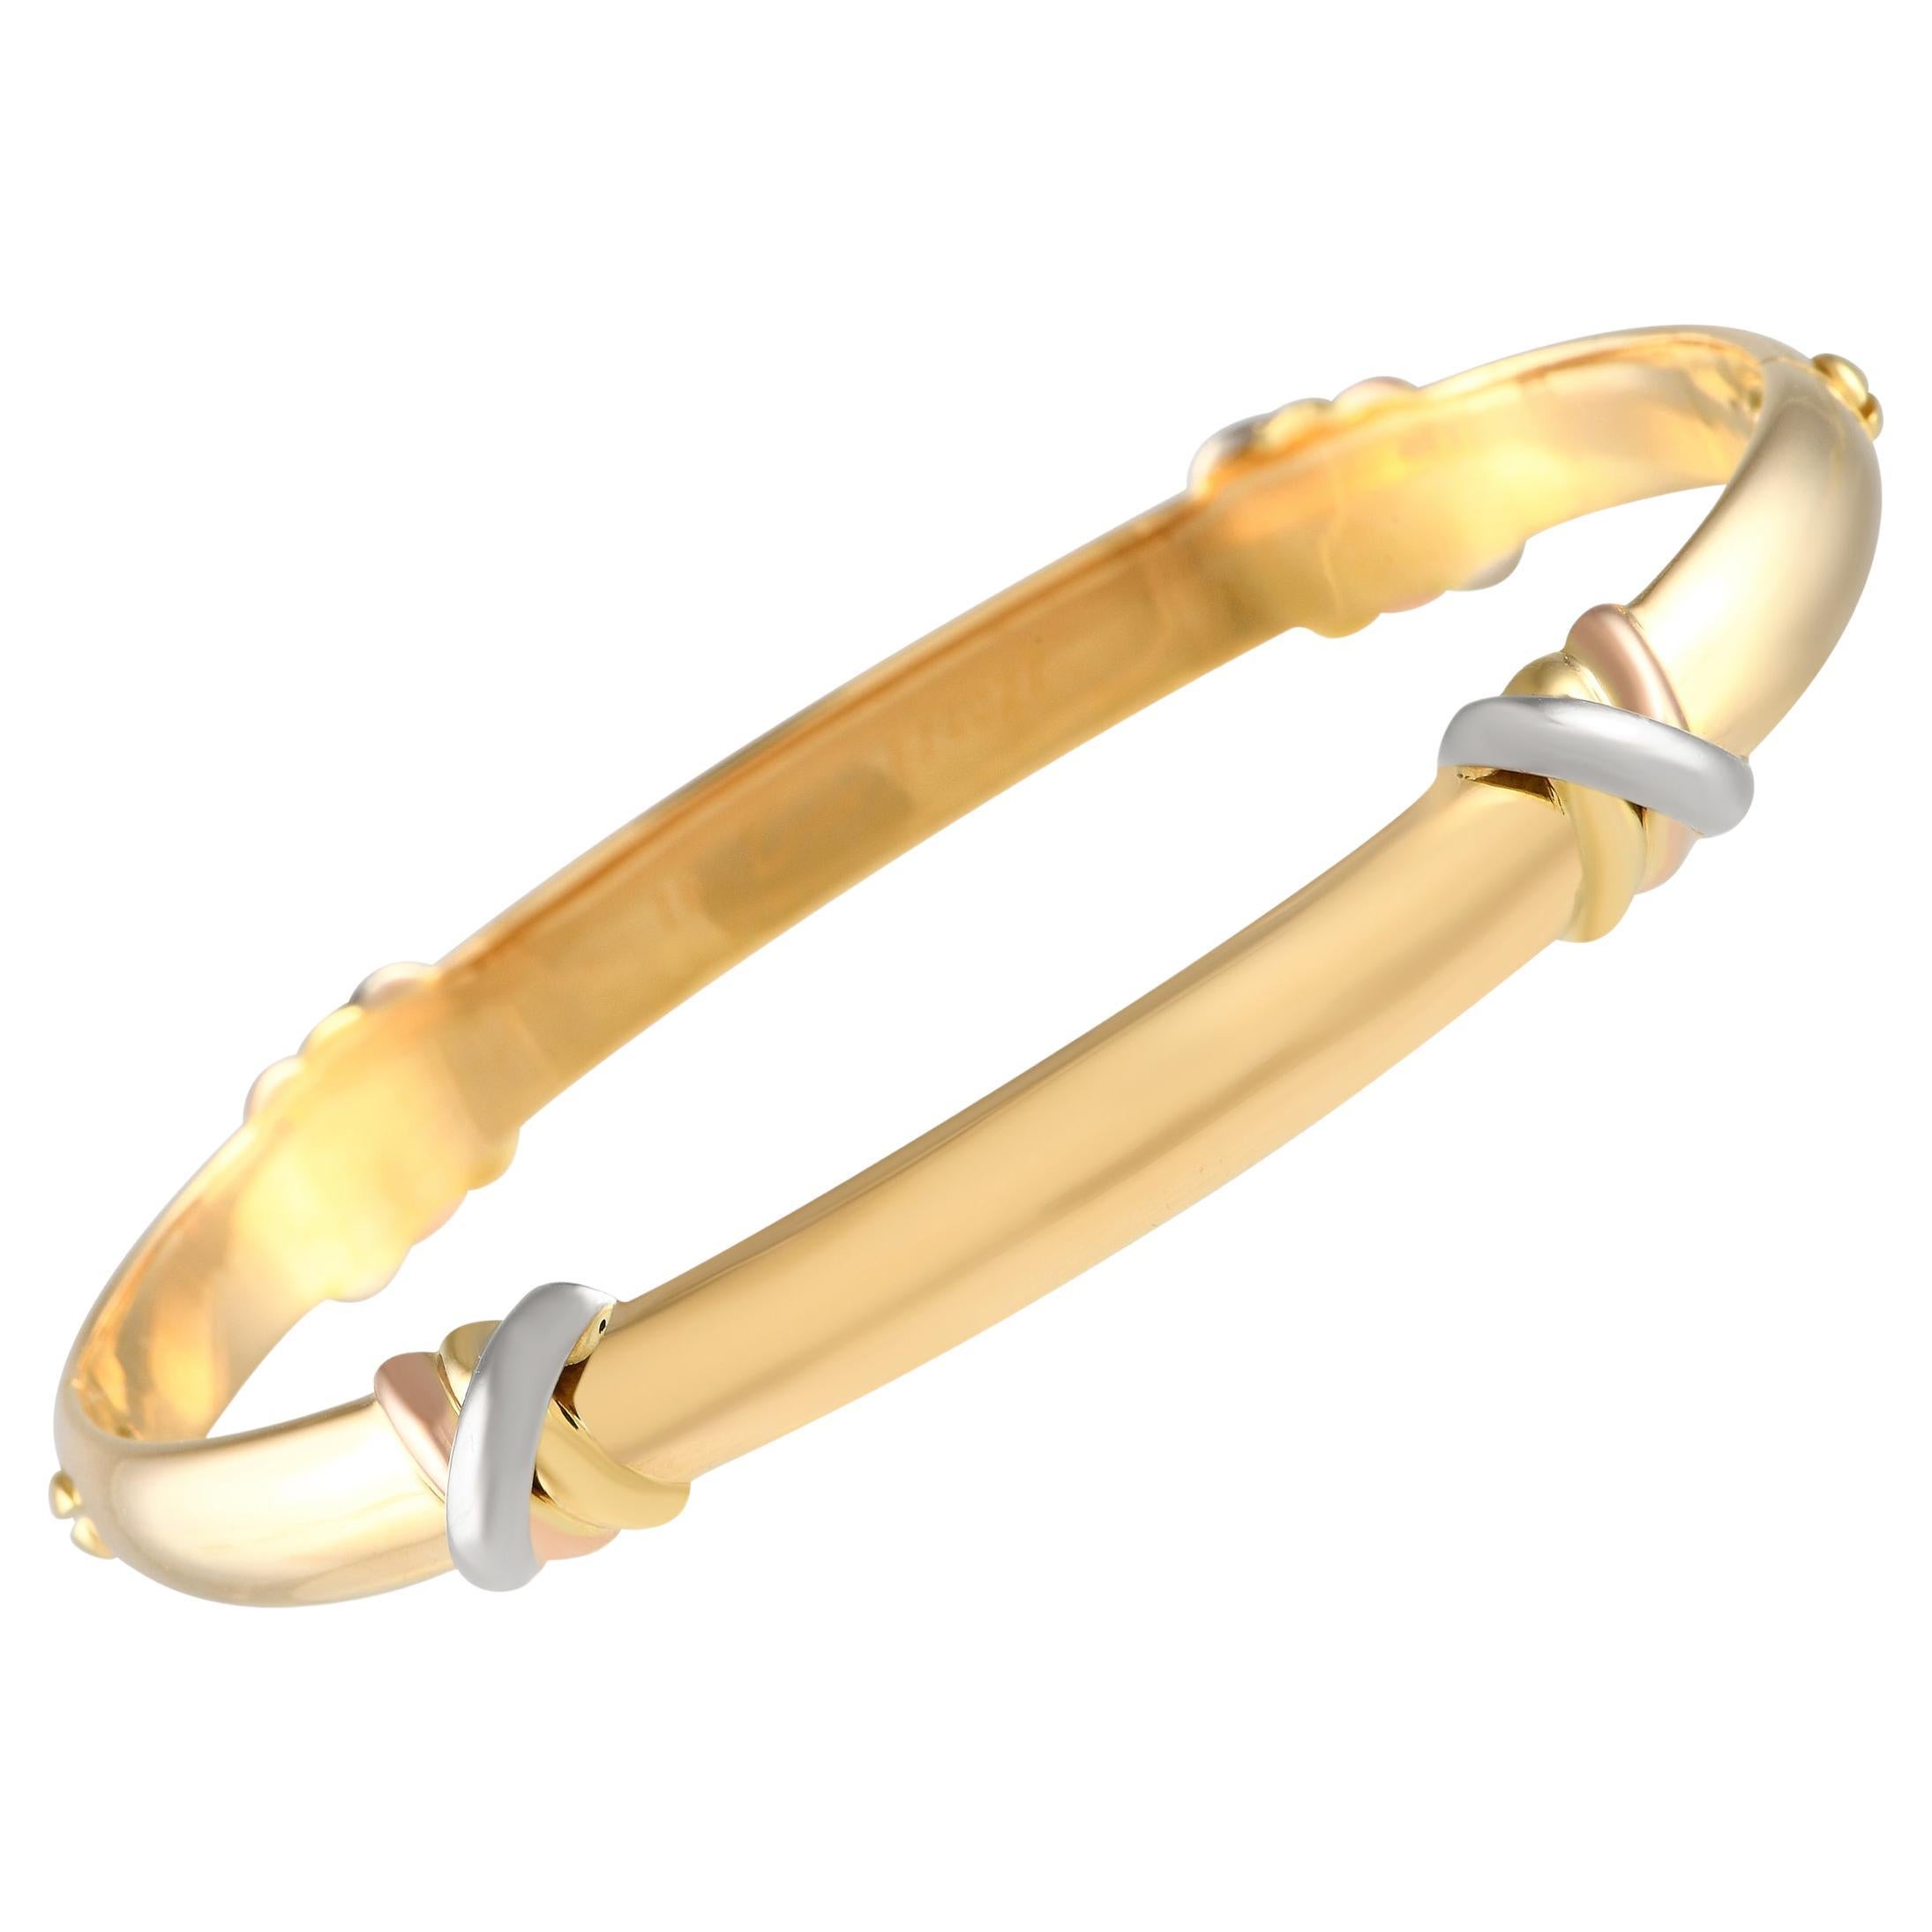 Mens bracelet gold jewelry, Man gold bracelet design, Mens gold jewelry